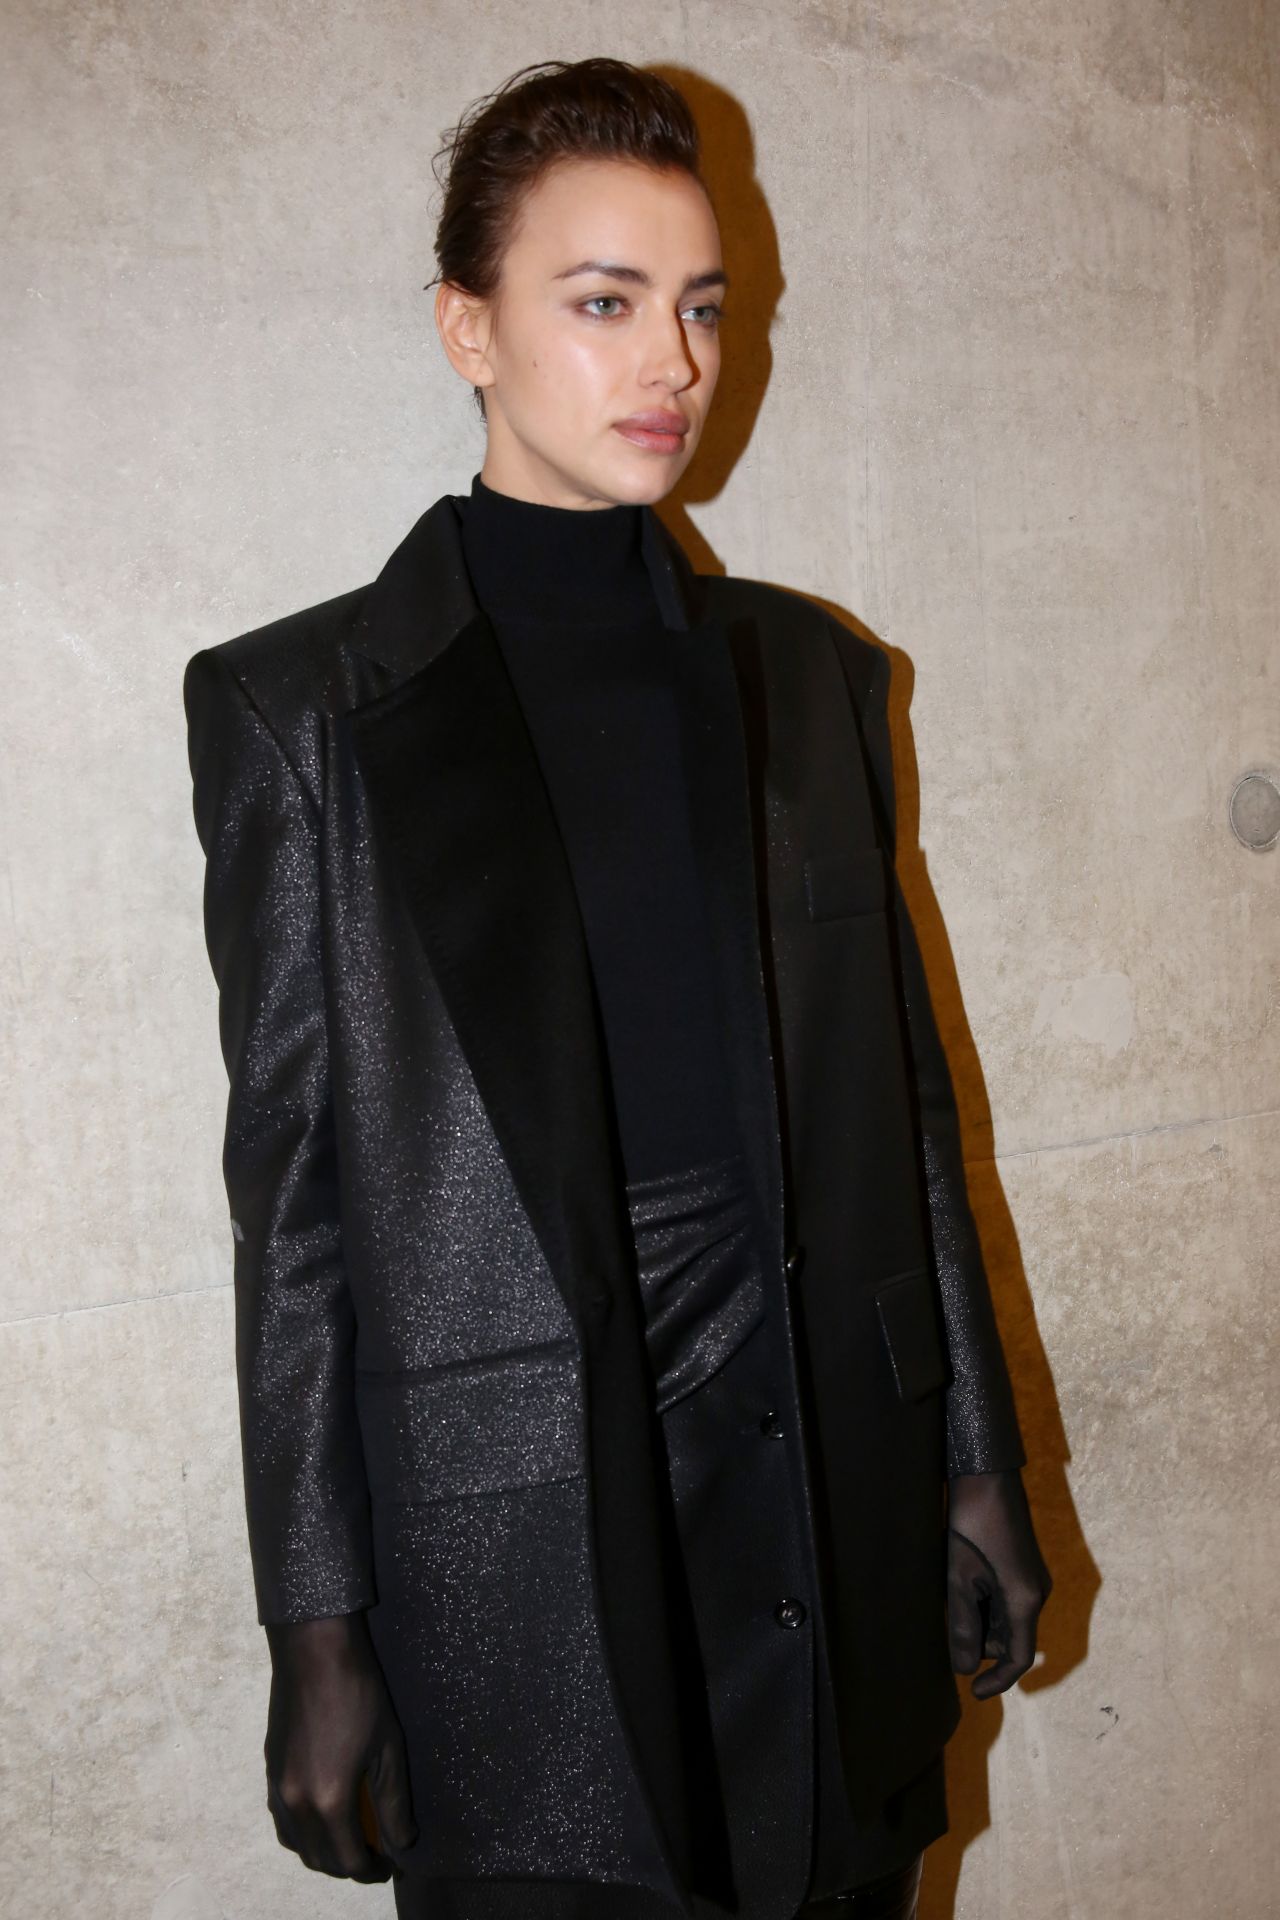 Irina Shayk Walks Max Mara Show at Milan Fashion Week 02/21/2019 ...